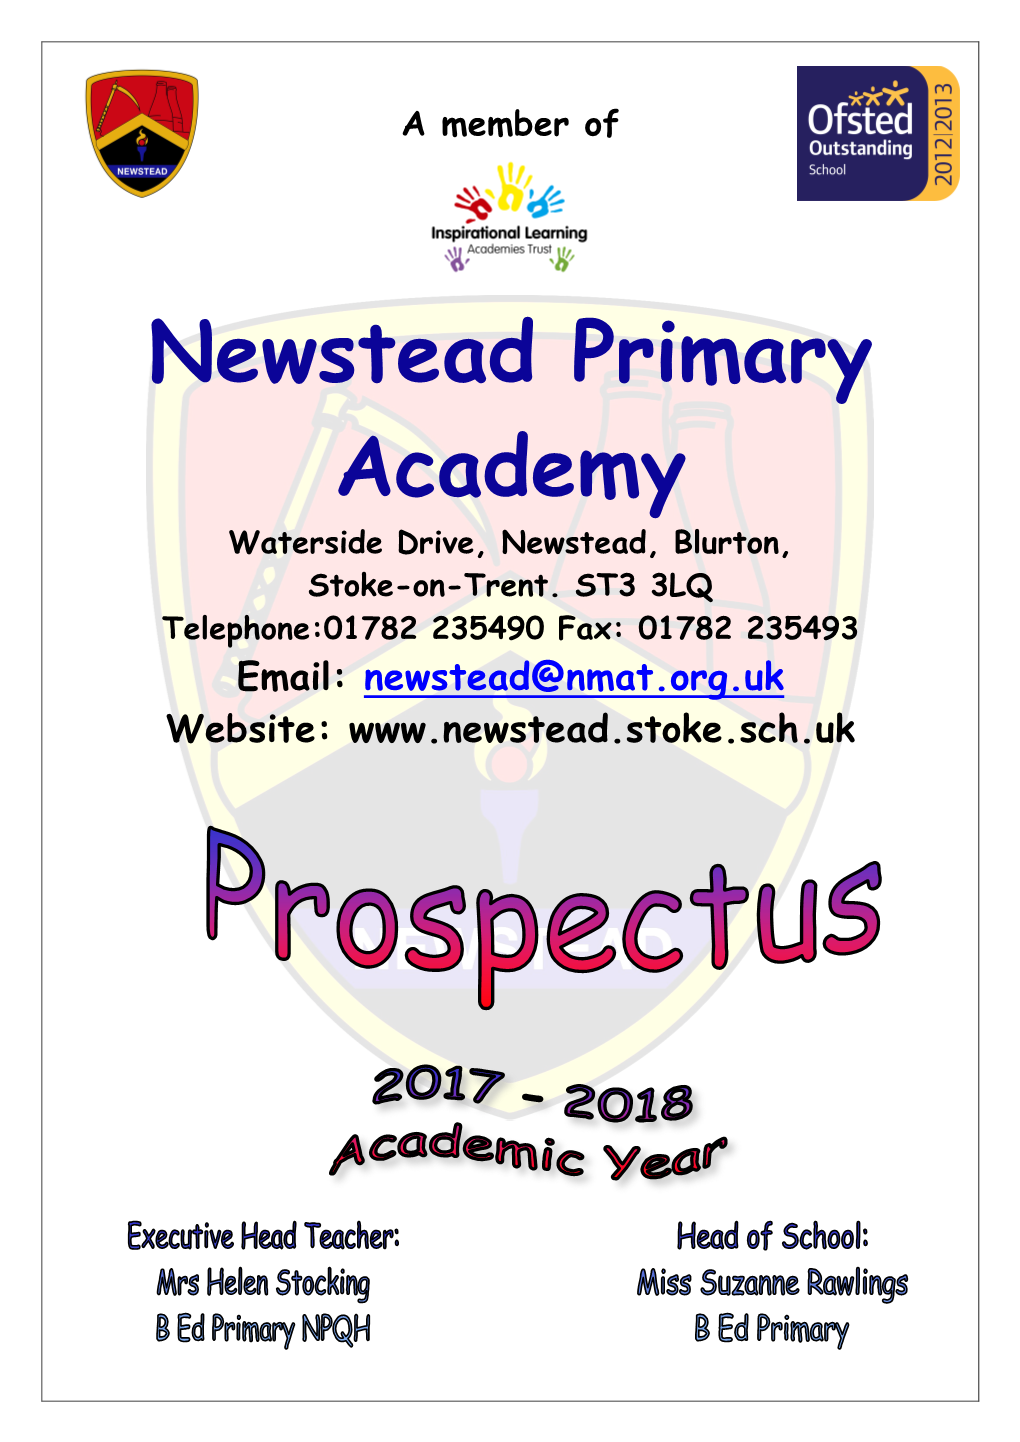 Newstead Primary Academy Waterside Drive, Newstead, Blurton, Stoke-On-Trent